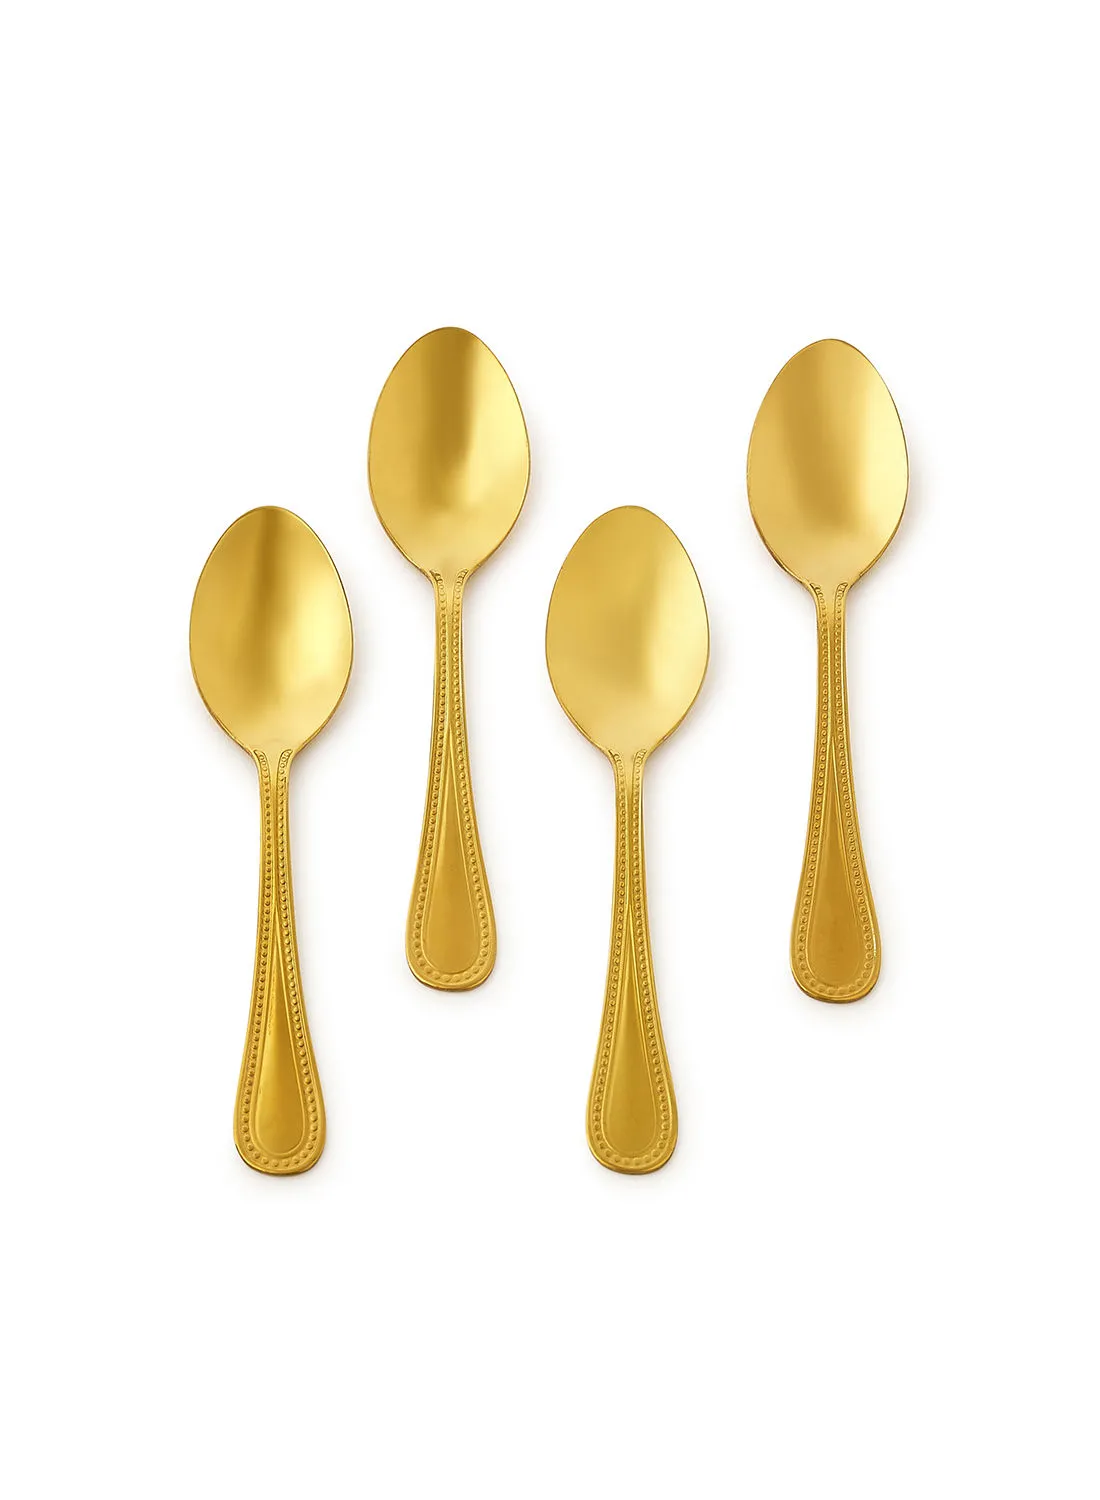 Amal 4 Piece Teaspoons Set - Made Of Stainless Steel - Silverware Flatware - Spoons - Spoon Set - Tea Spoons - Serves 4 - Design Gold Mallow